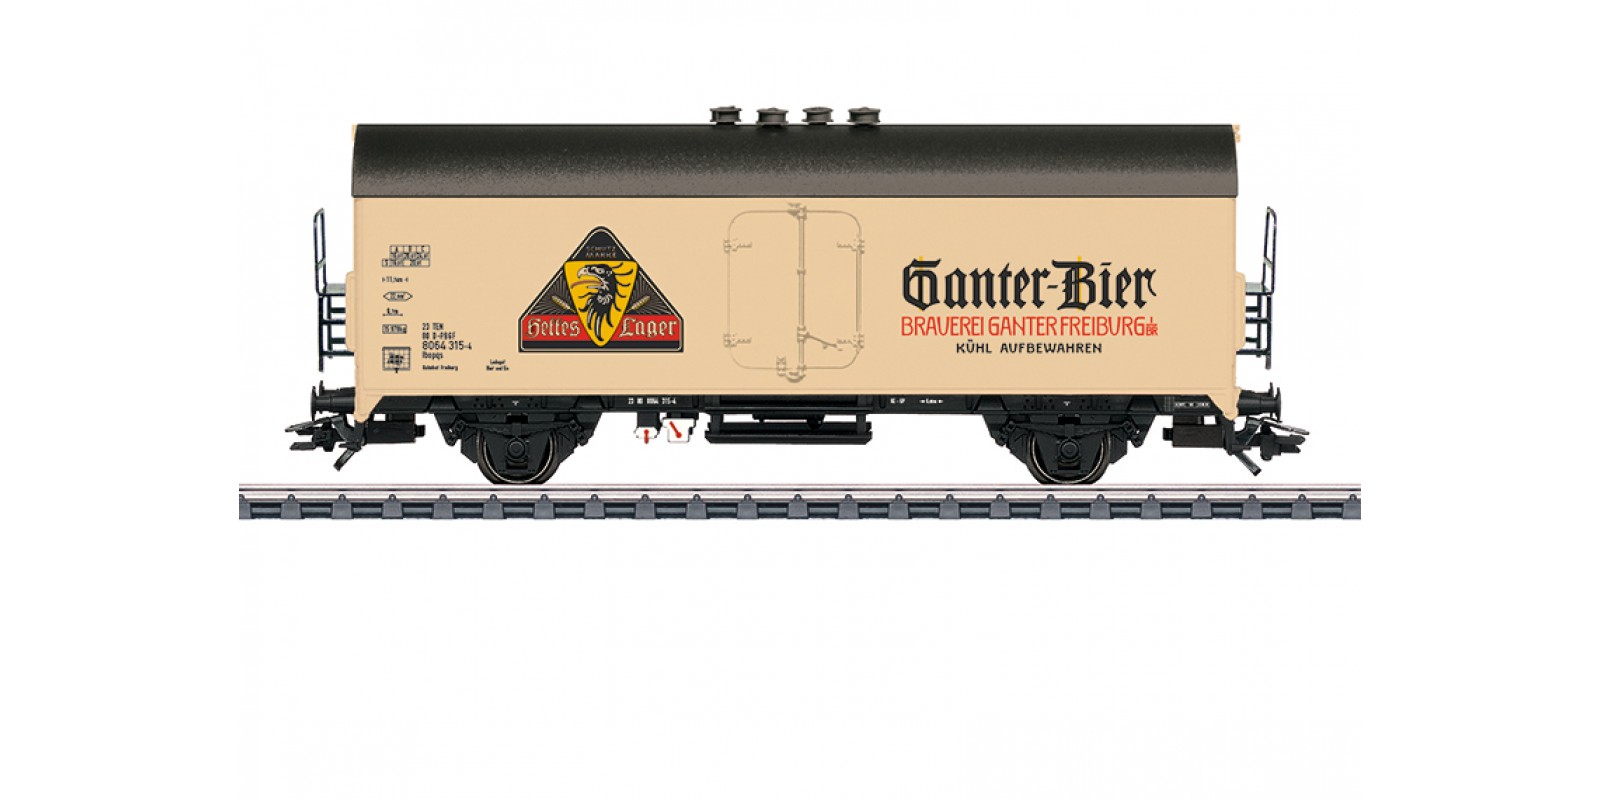 45026 "Ganter" Beer Car